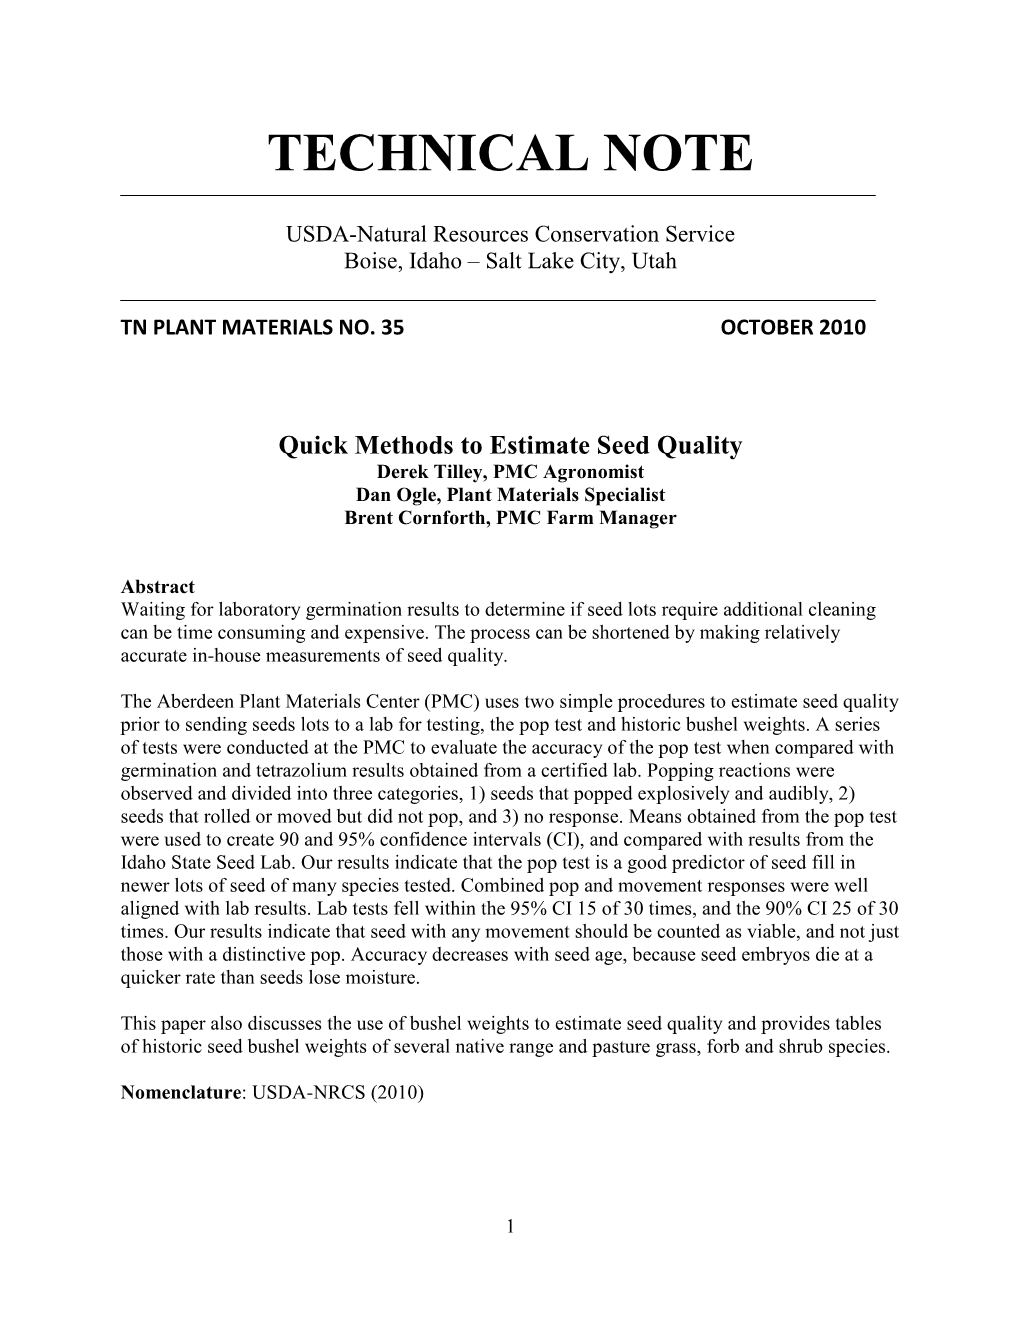 Idaho Plant Materials Technical Note No. 35, Quick Method to Estimate